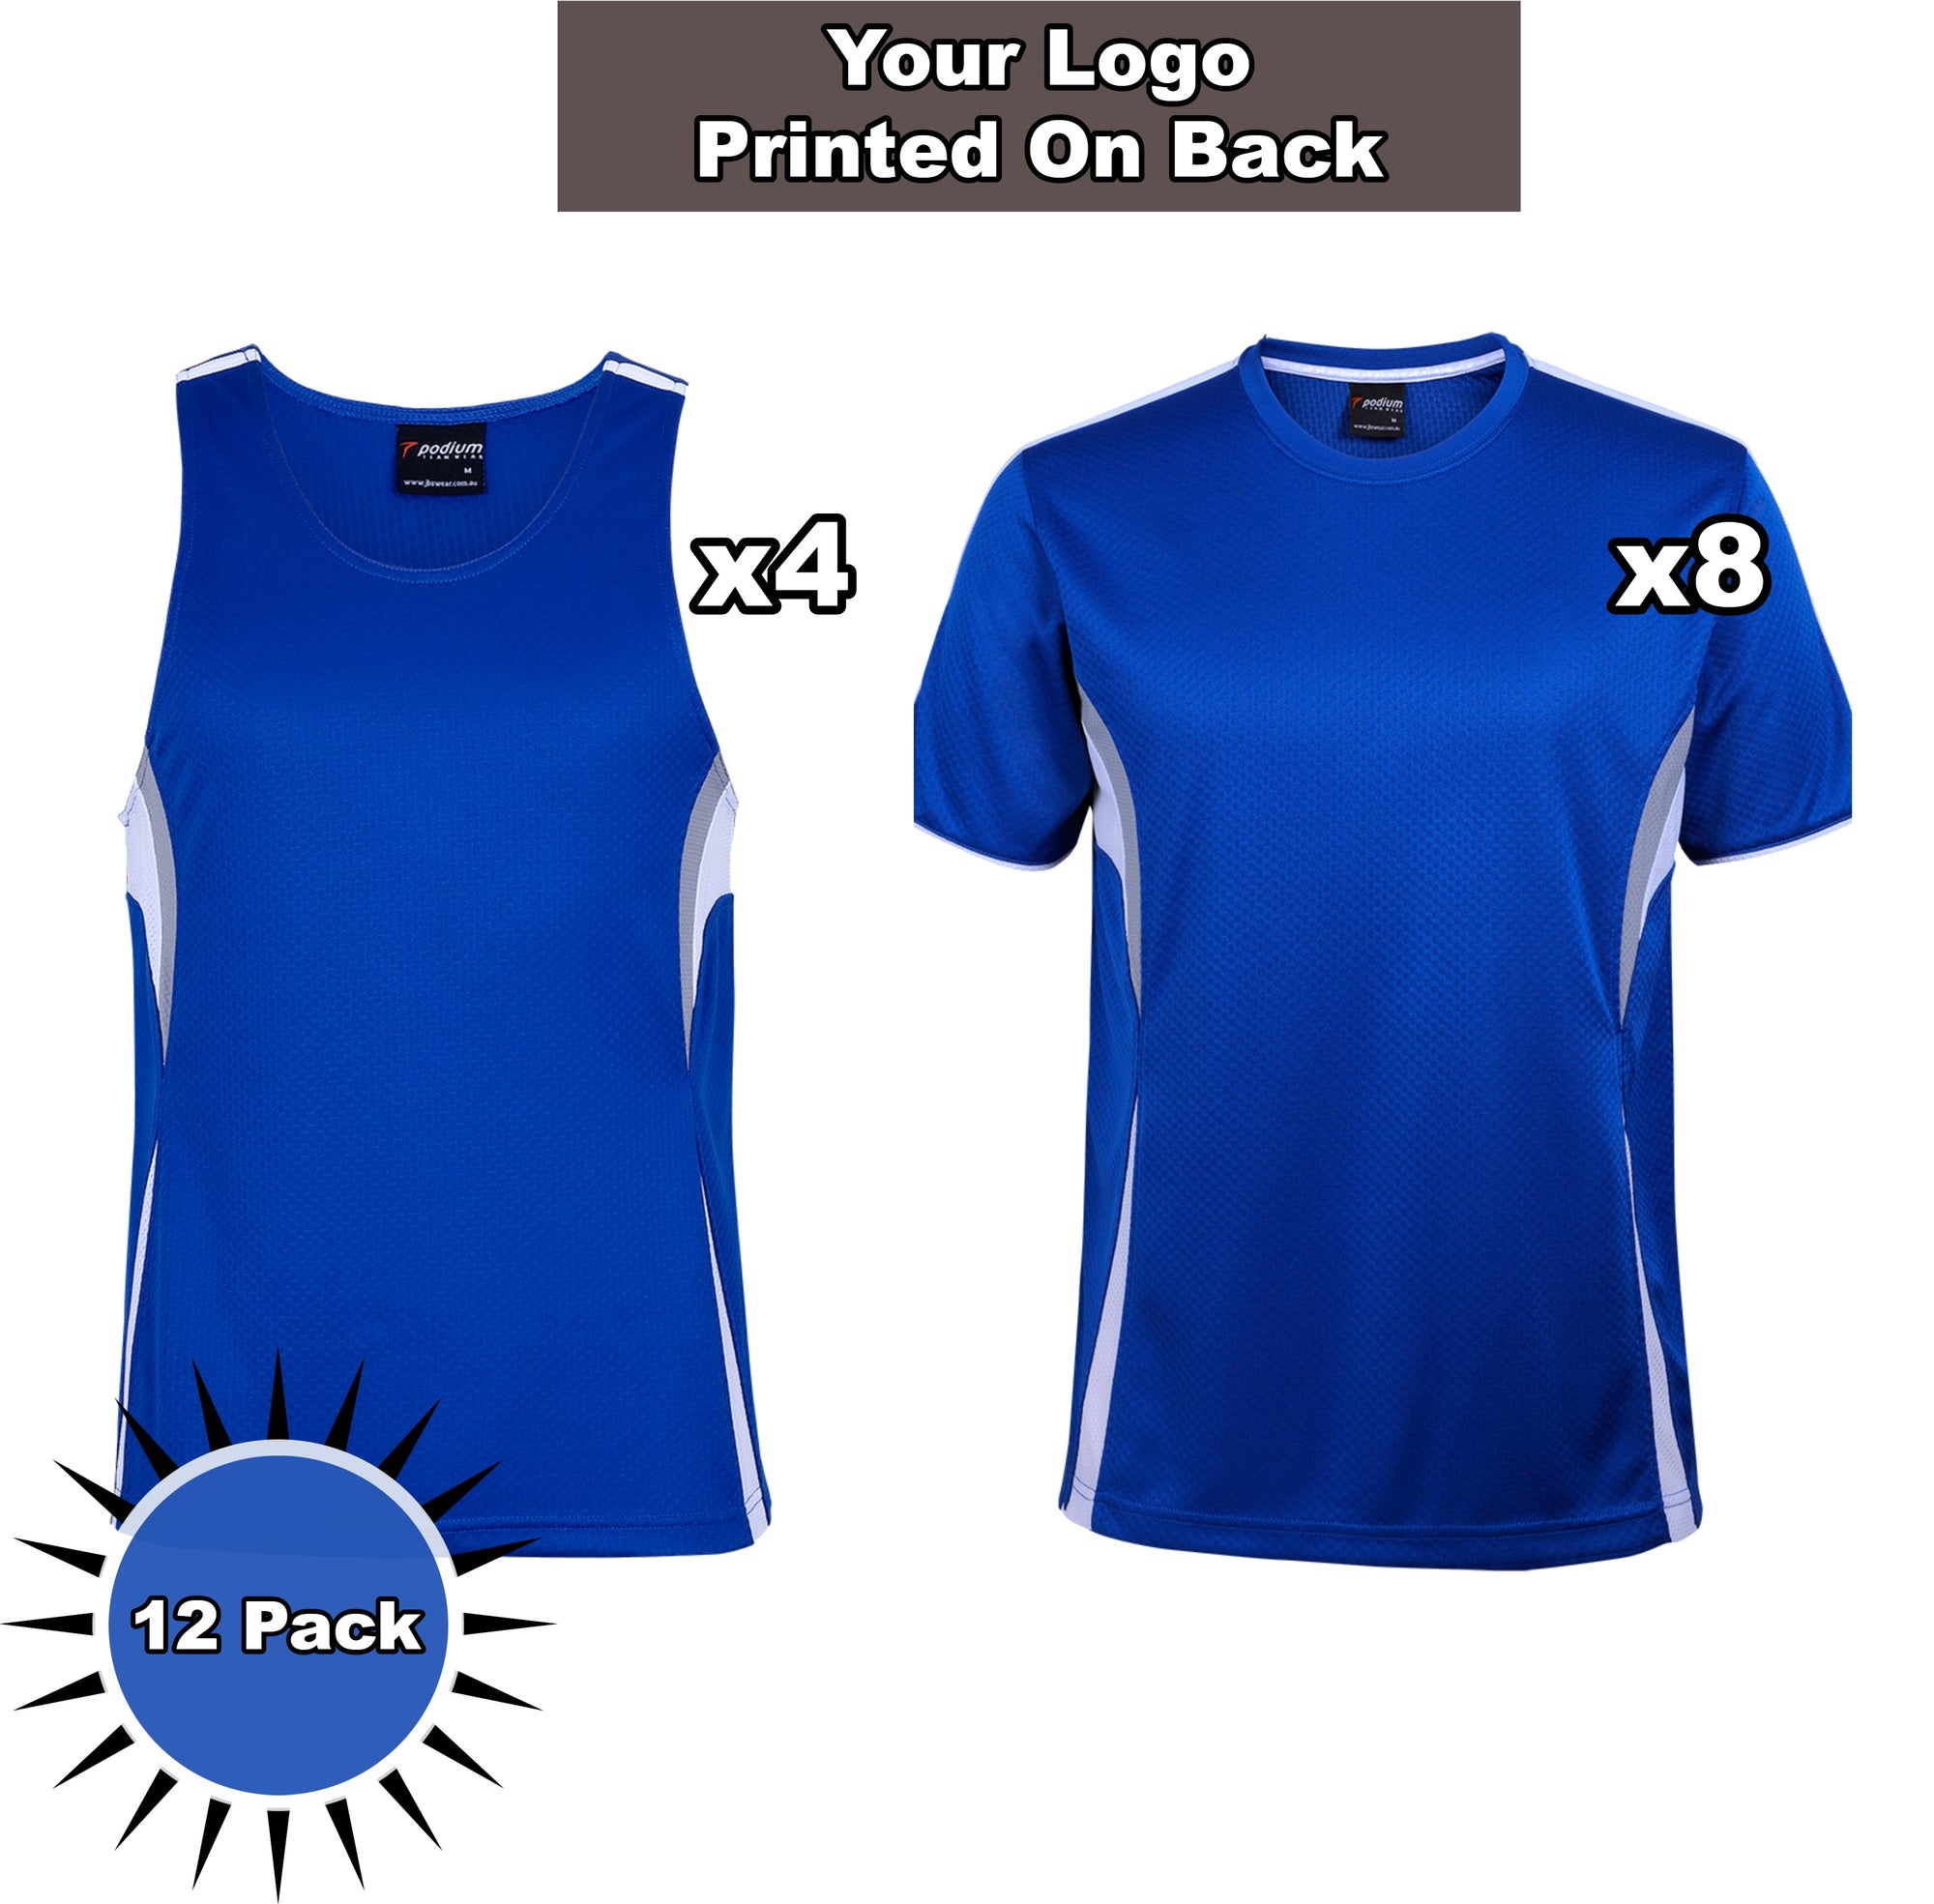 Podium Cool Singlet/Tee Shirt 12 Pack Printed On Back - Safe-T-Rex Workwear Pty Ltd